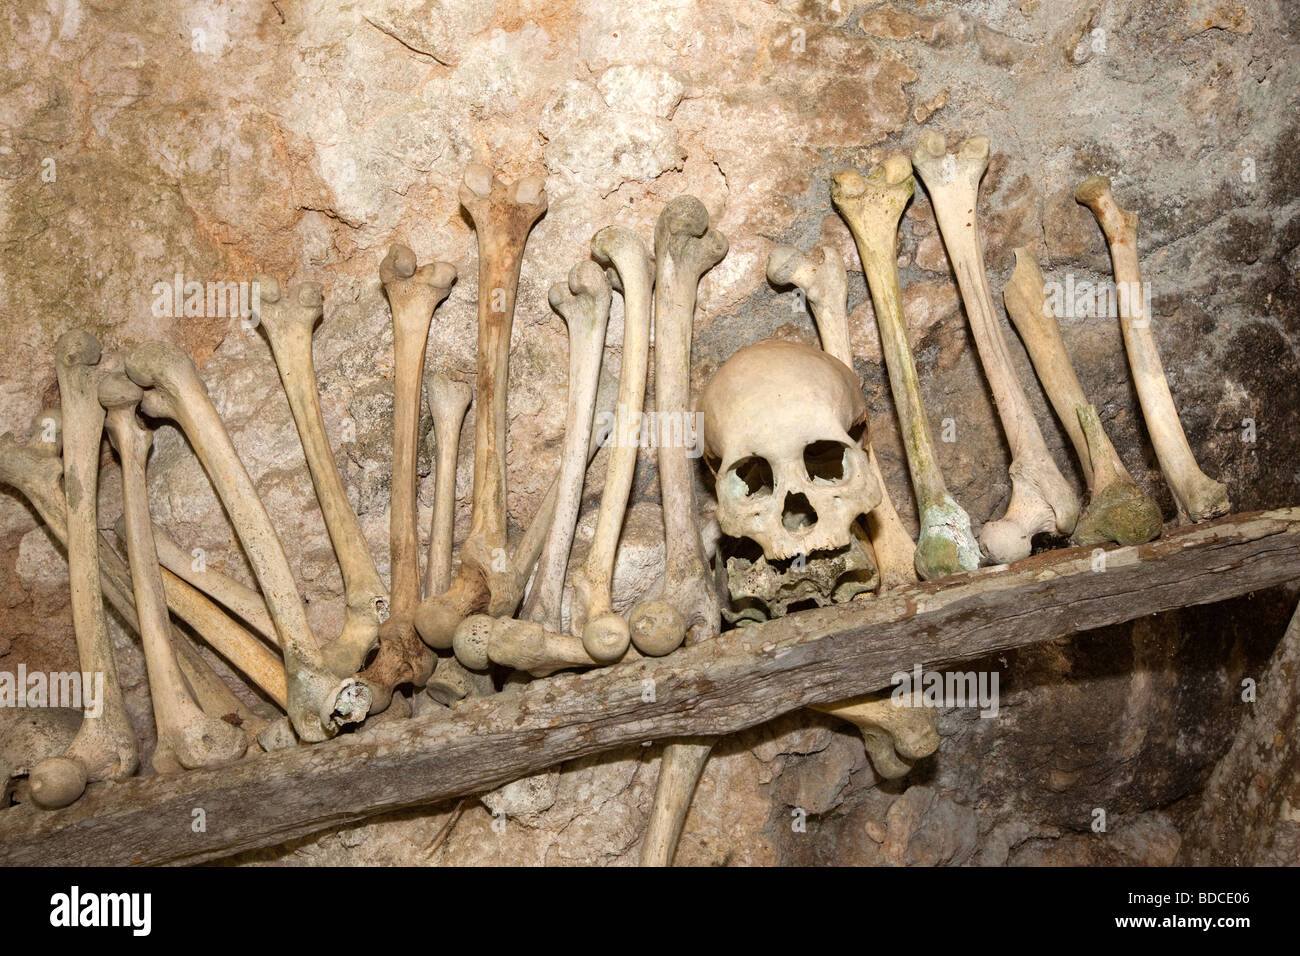 Indonesia Sulawesi Tana Toraja Kete Kesu exposed human skull and femurs of dead ancestors Stock Photo